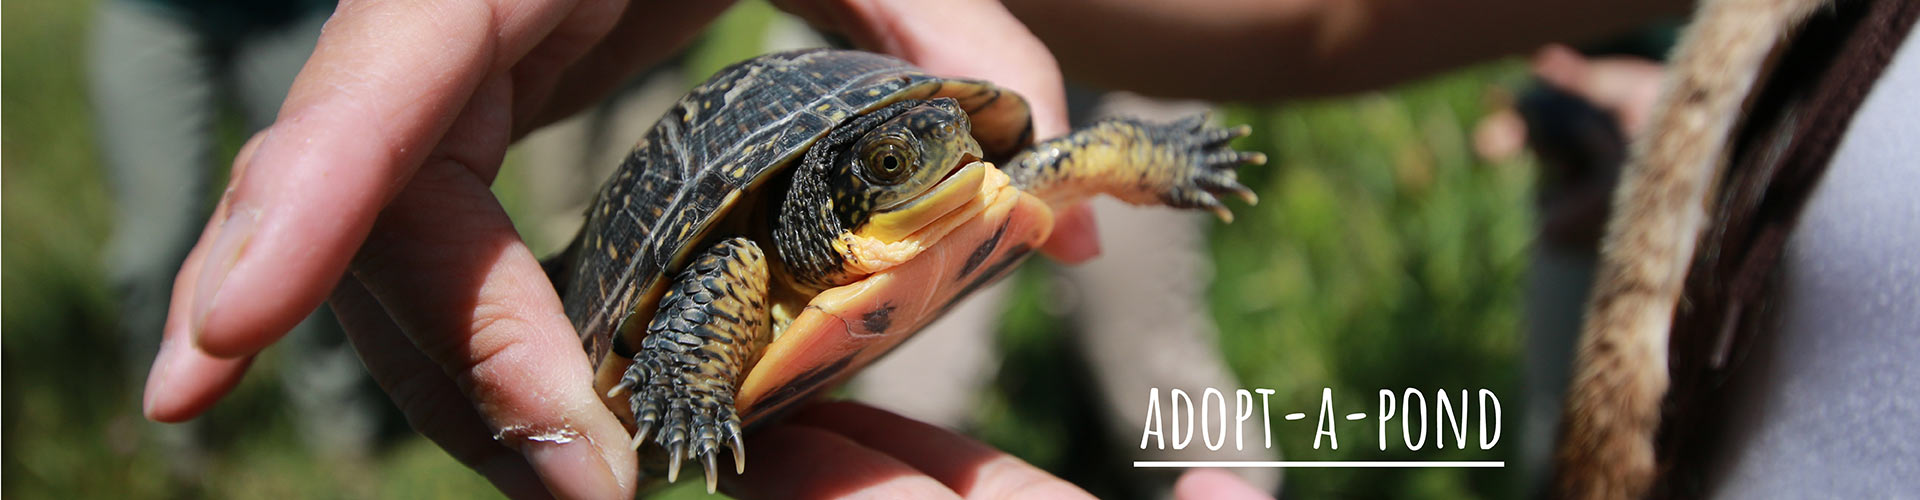 Adopt A Pond - Turtle Conservation Curriculum